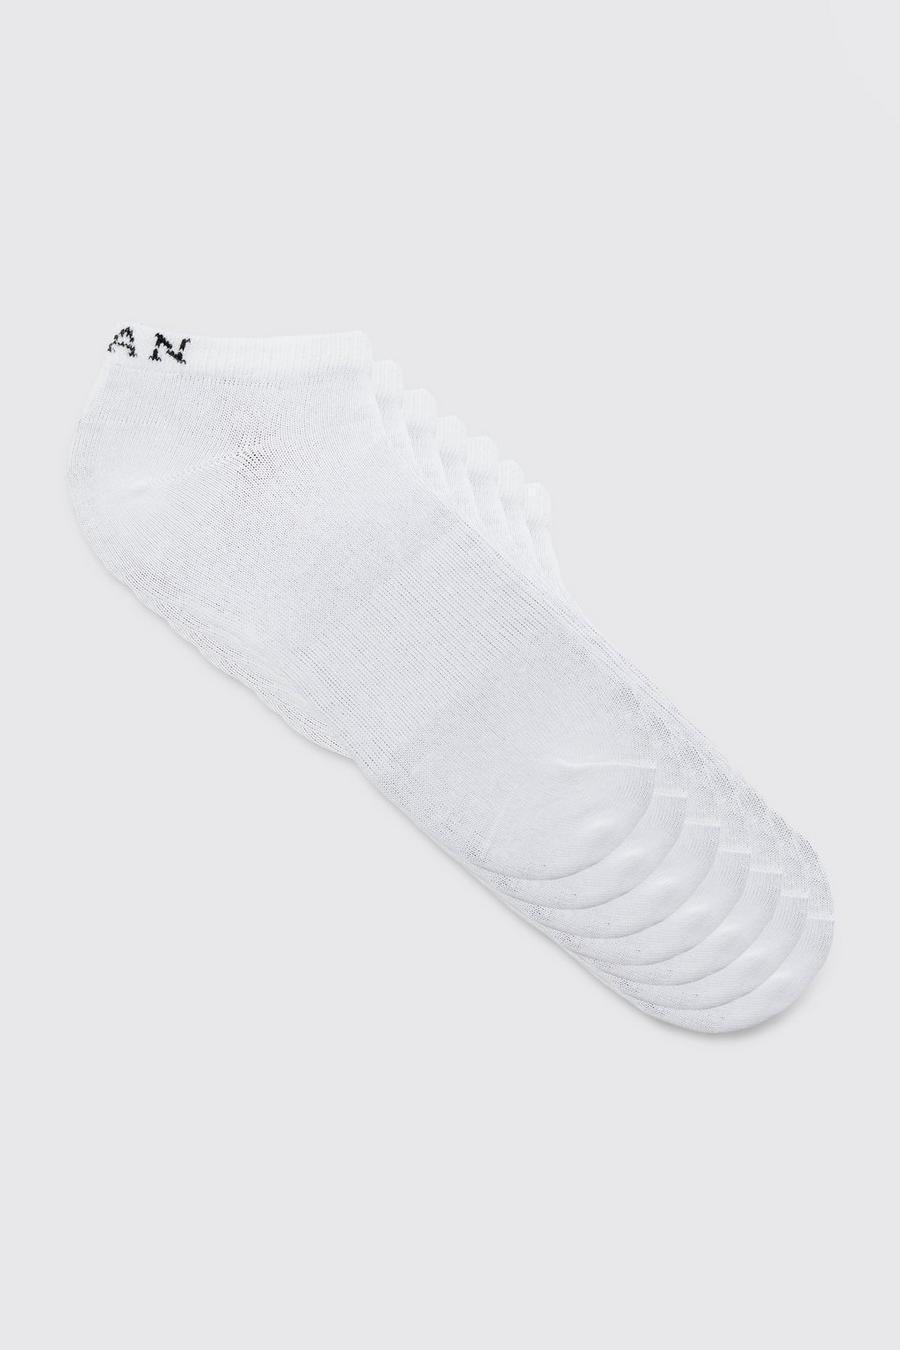 Pack de 7 pares de calcetines MAN deportivos, White